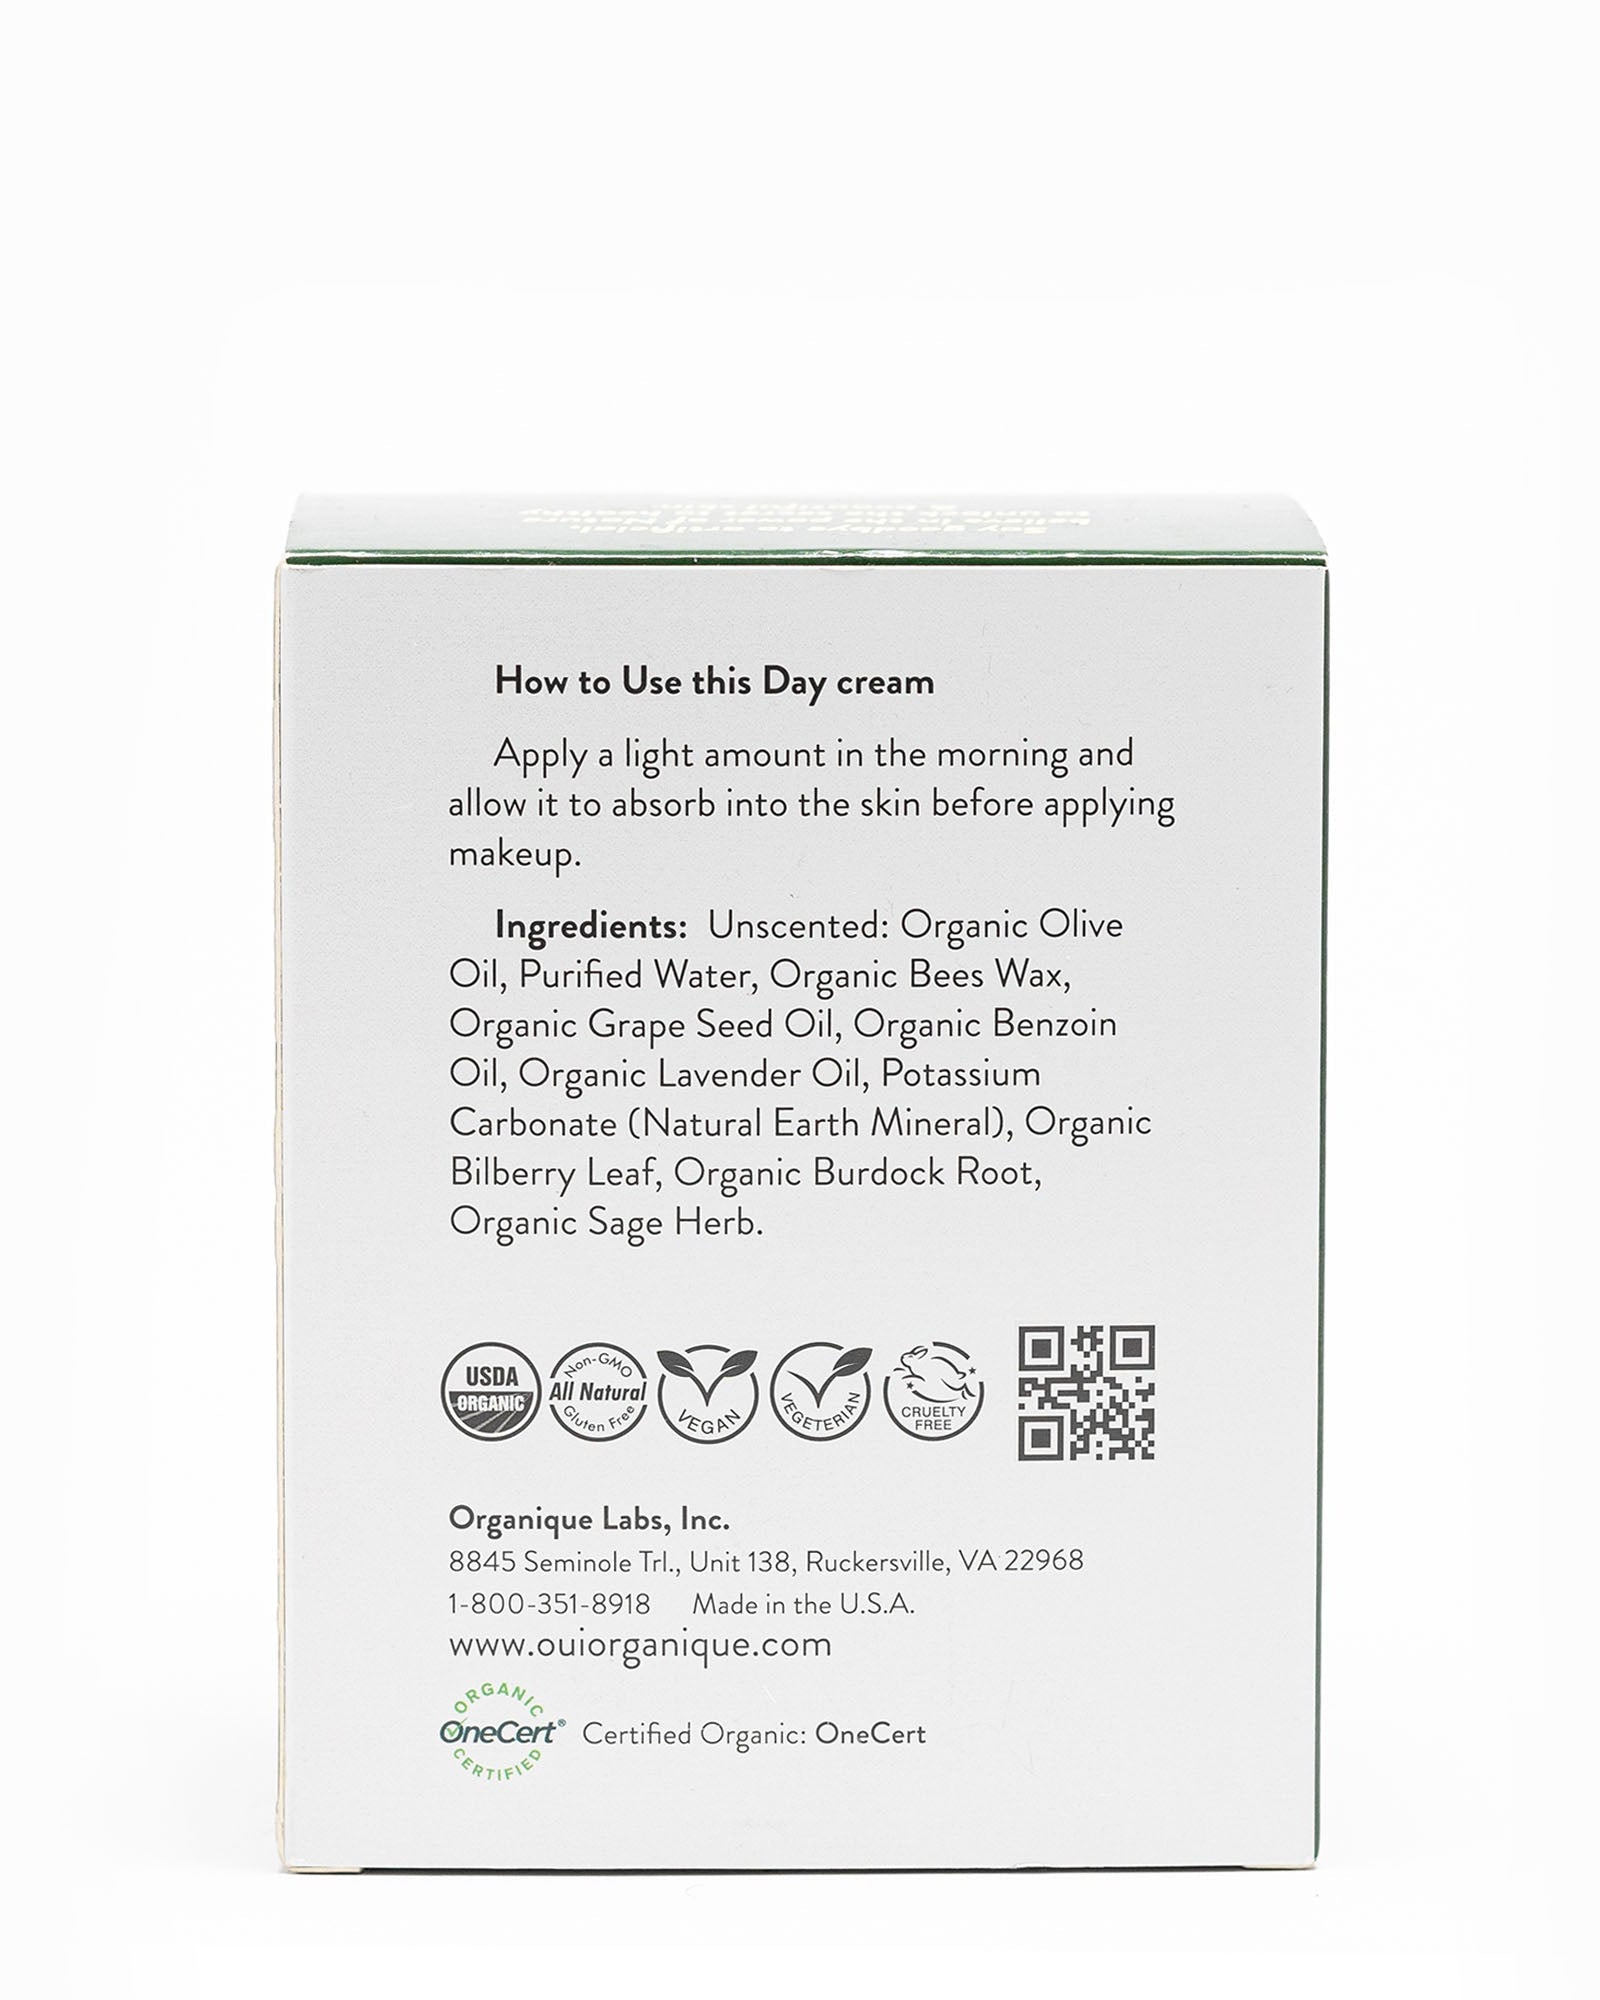 Certified Organic Rejuvenating Day Cream burdock Root|Detoxify |brighten| OUI ORGANIQUE